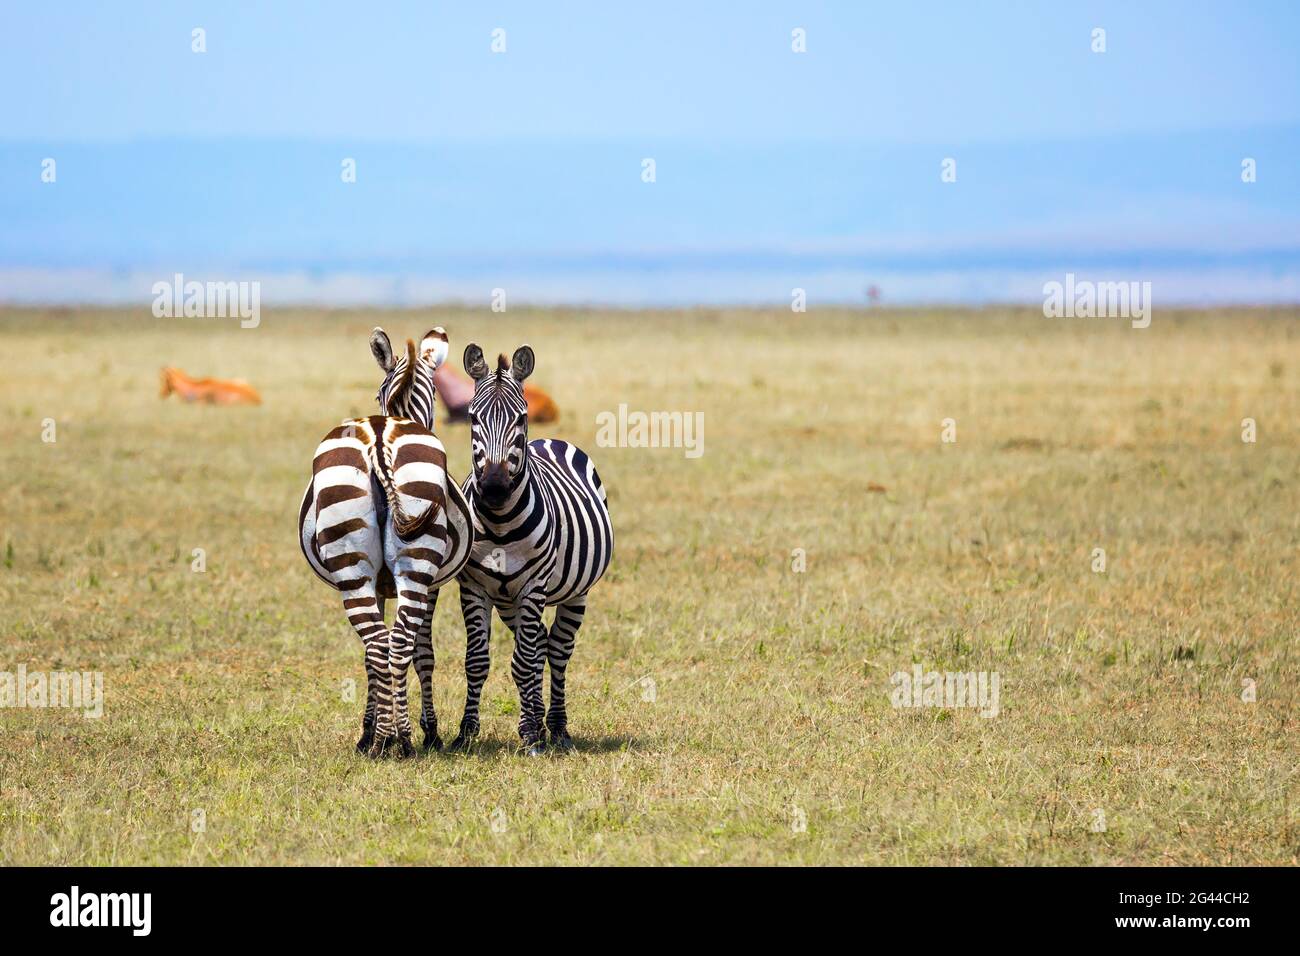 Charming symmetrical zebras graze together Stock Photo